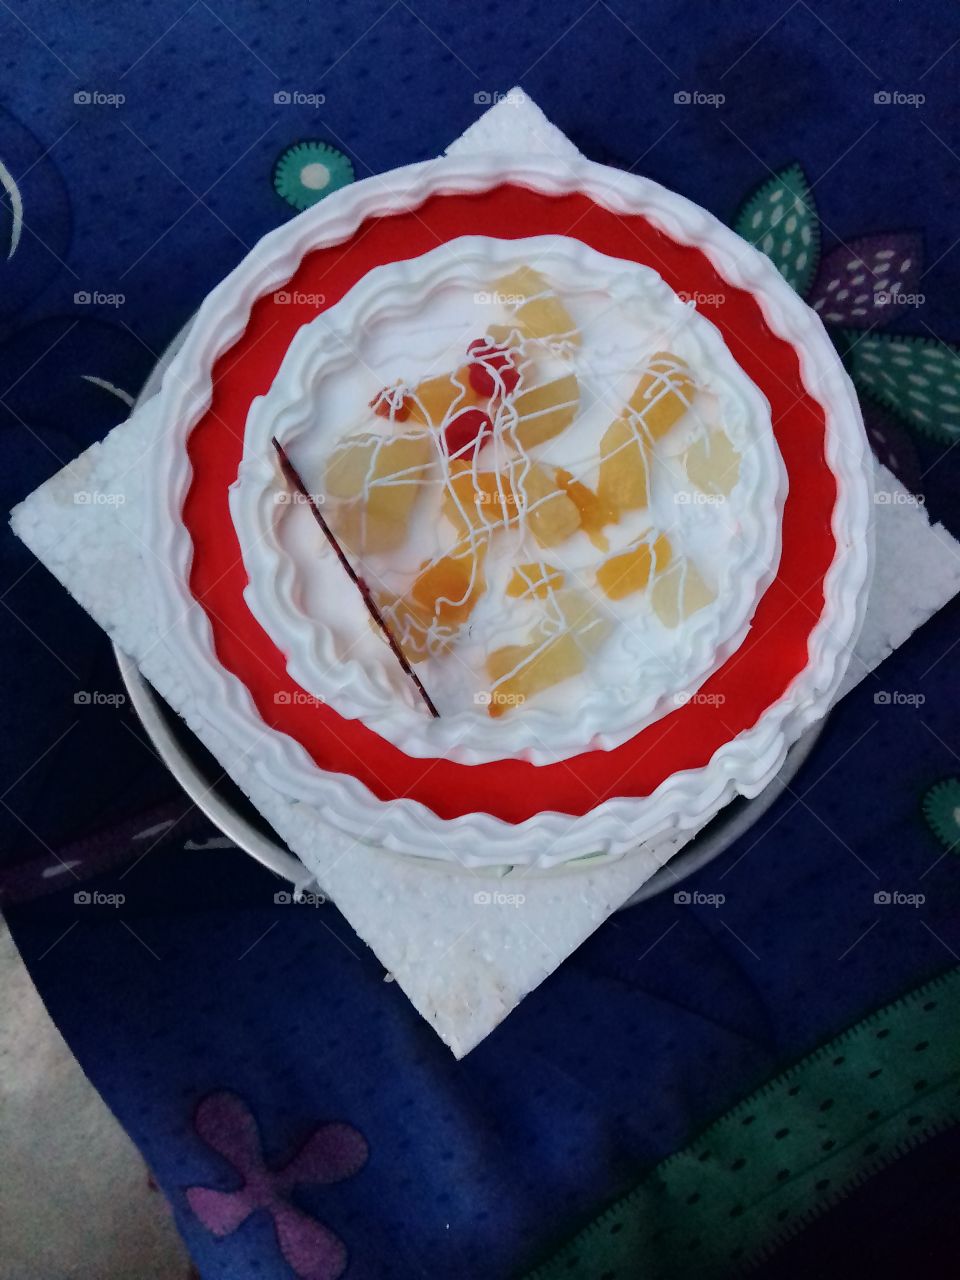 #Fruit 🍰 #Cake